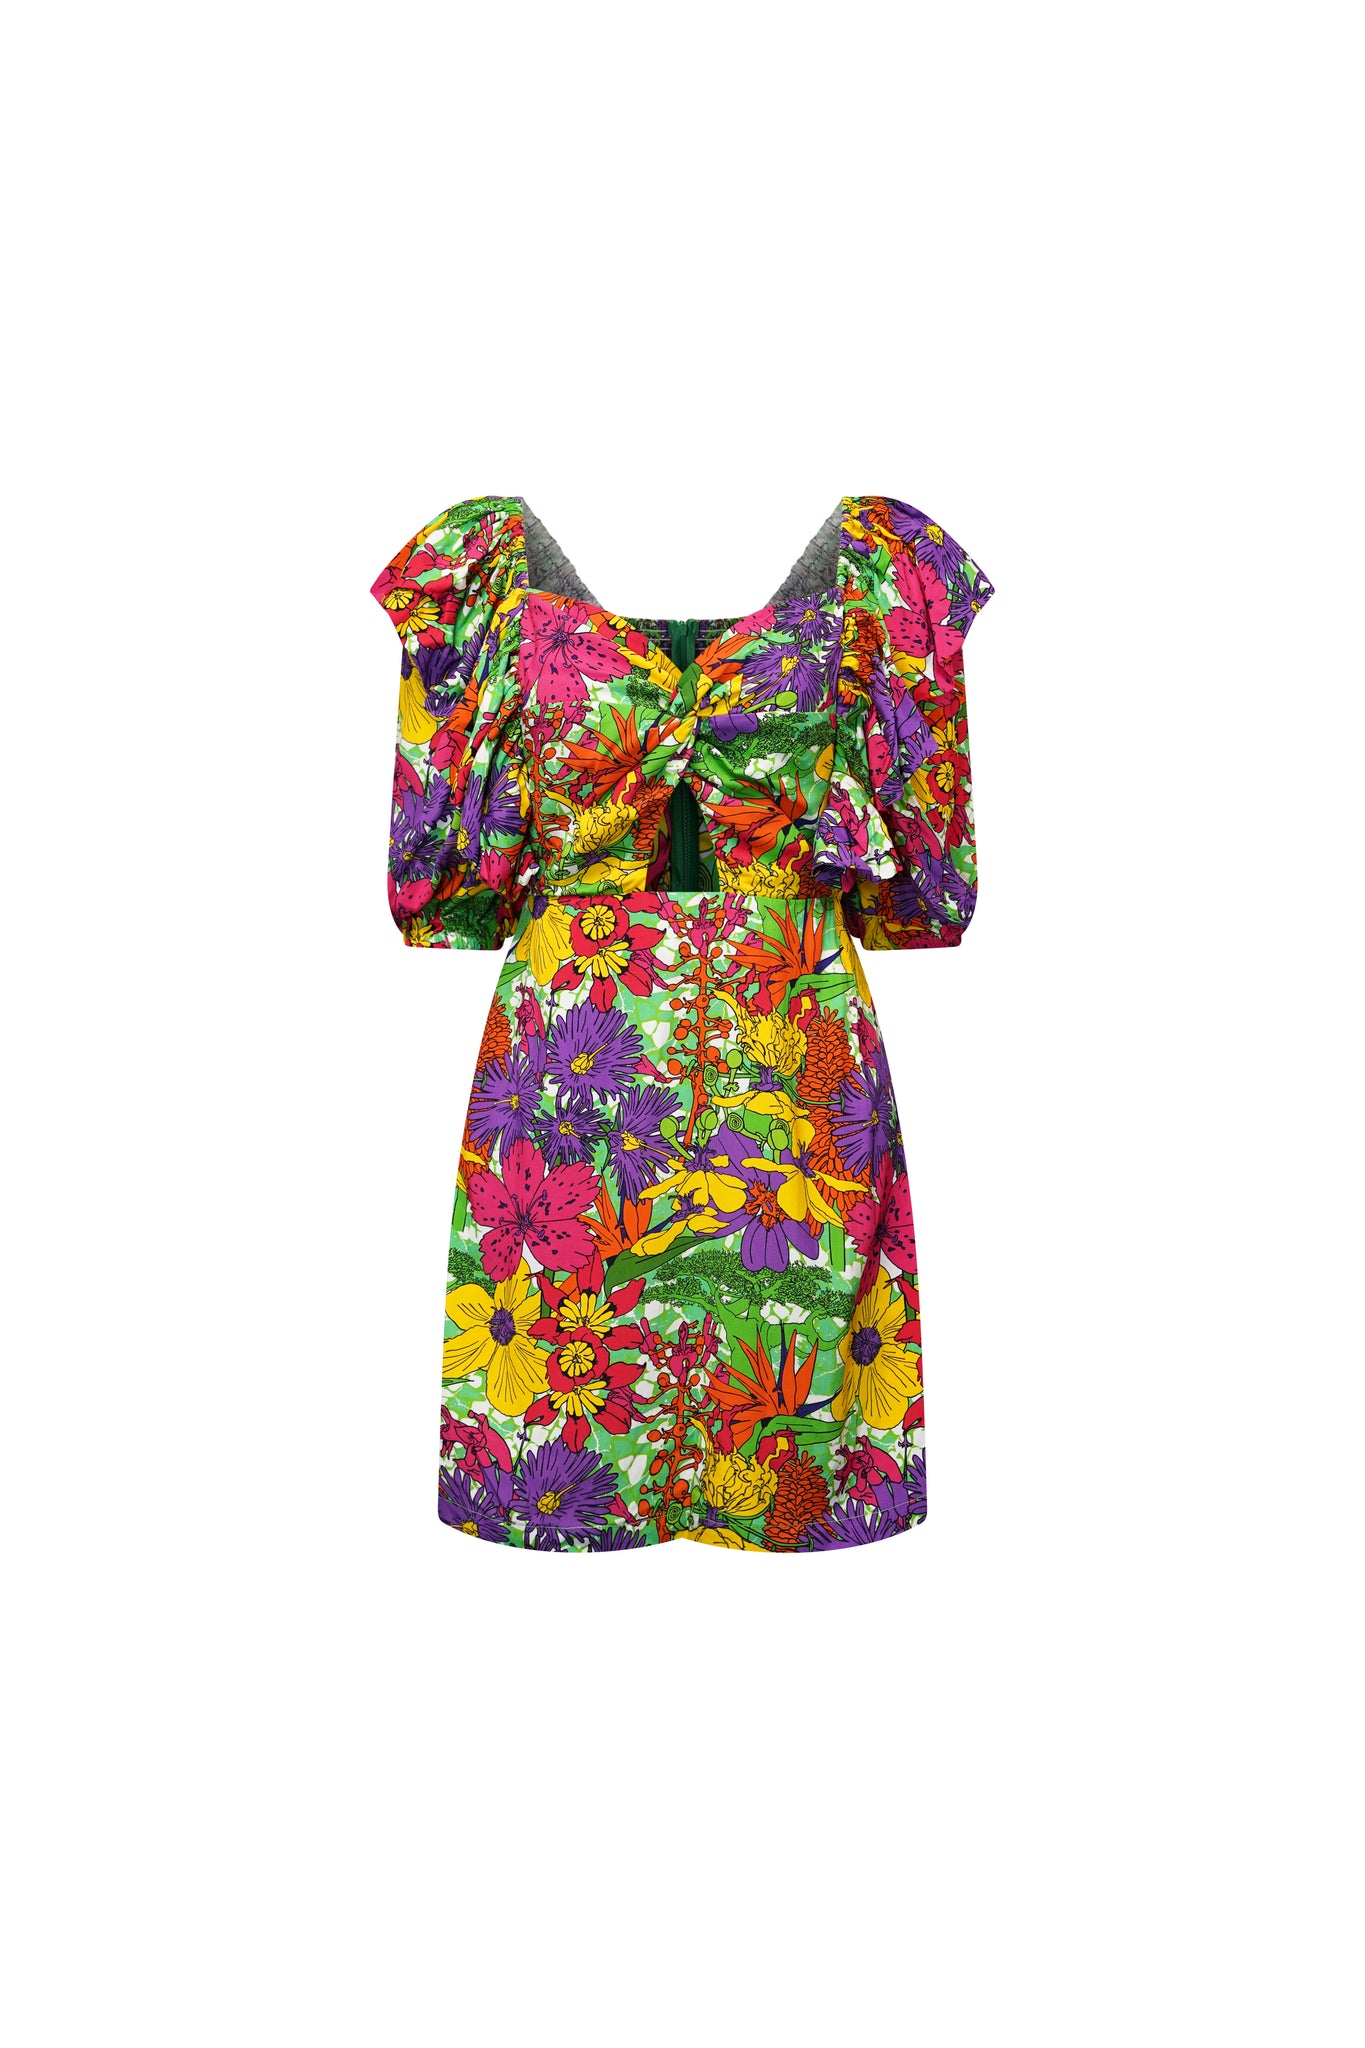 Zalika Mini Dress with Sweetheart Neckline and Twist Detail - Green Pink Yellow Garden Mosaic Print | ILC OA OG